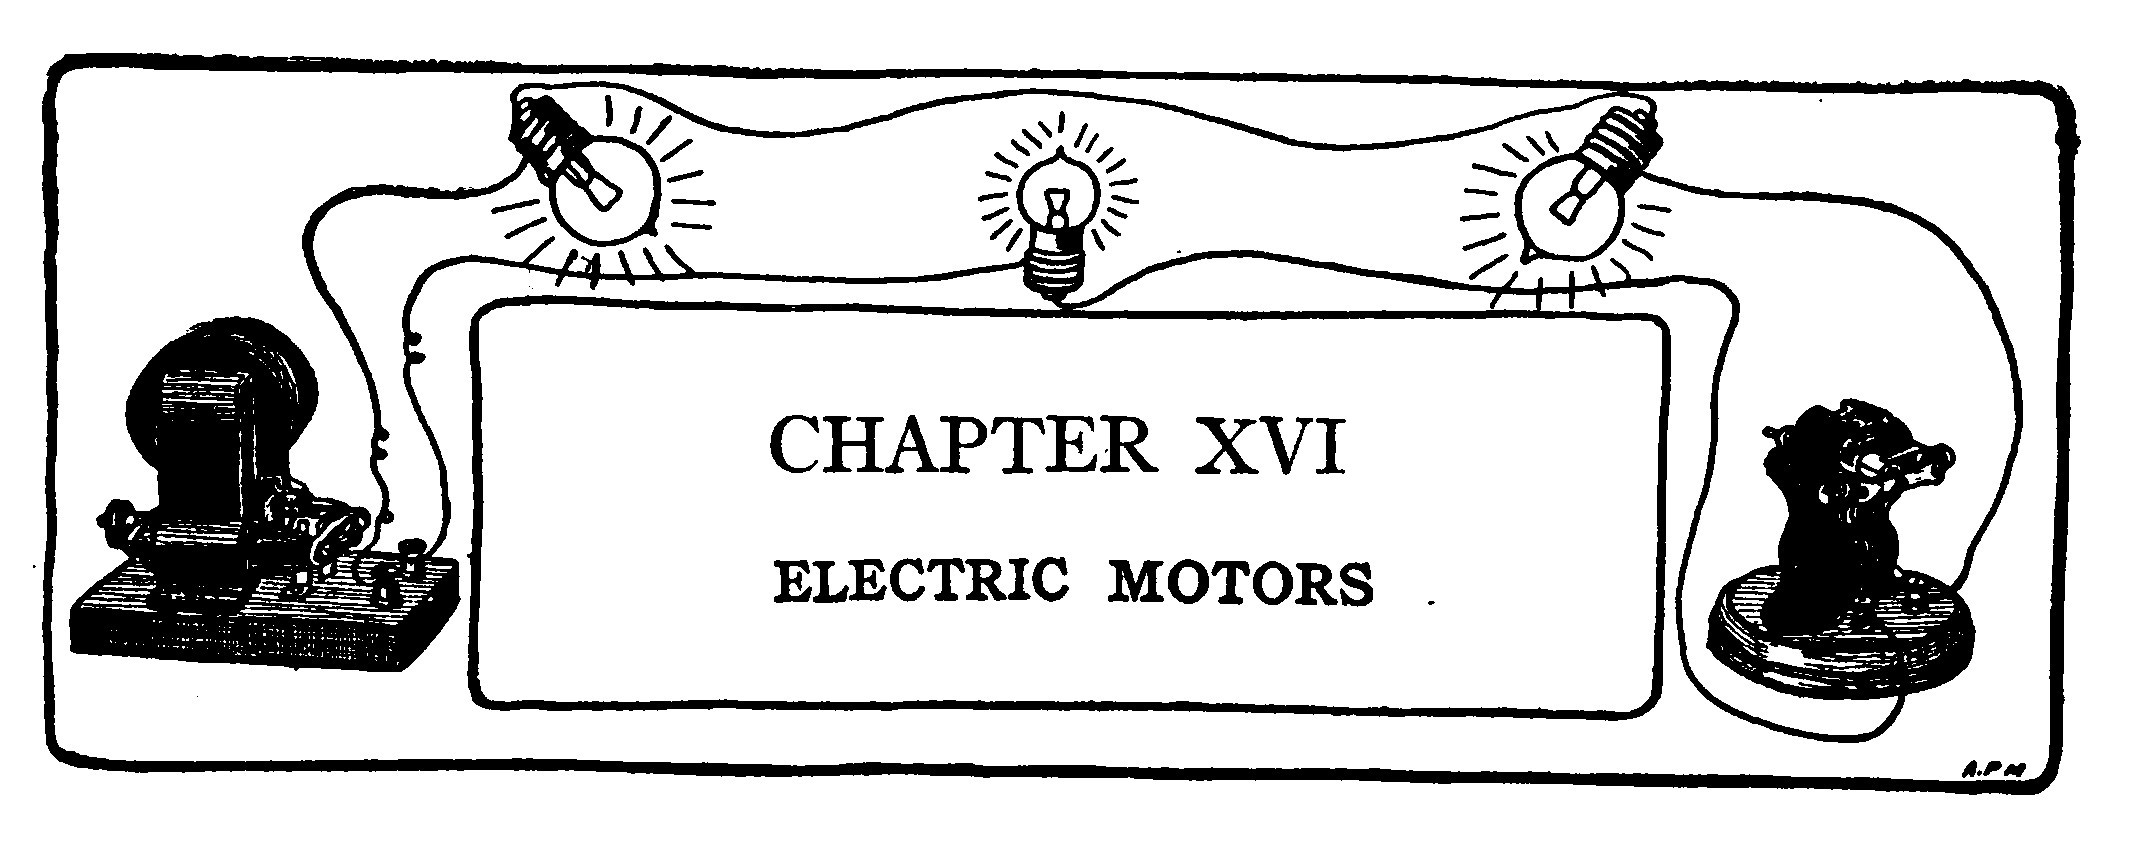 ELECTRIC MOTORS